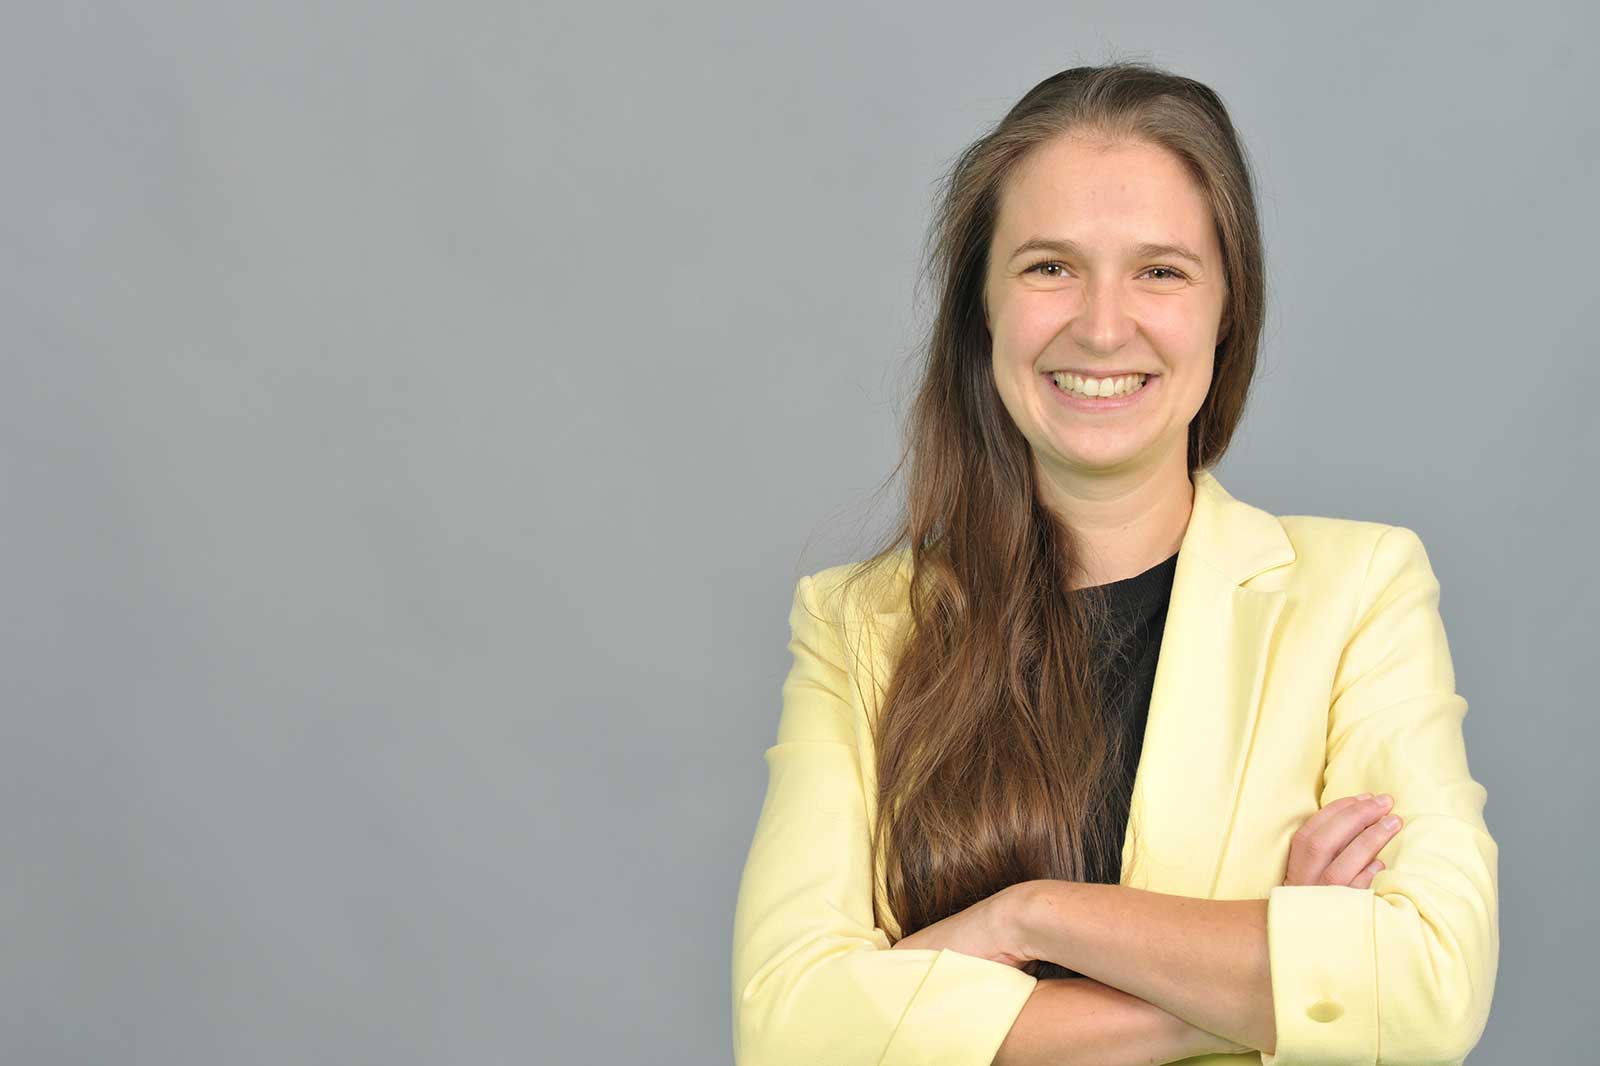 Hannah-Isabell Härter | Junior Project Engineer @ RWE Technology GmbH